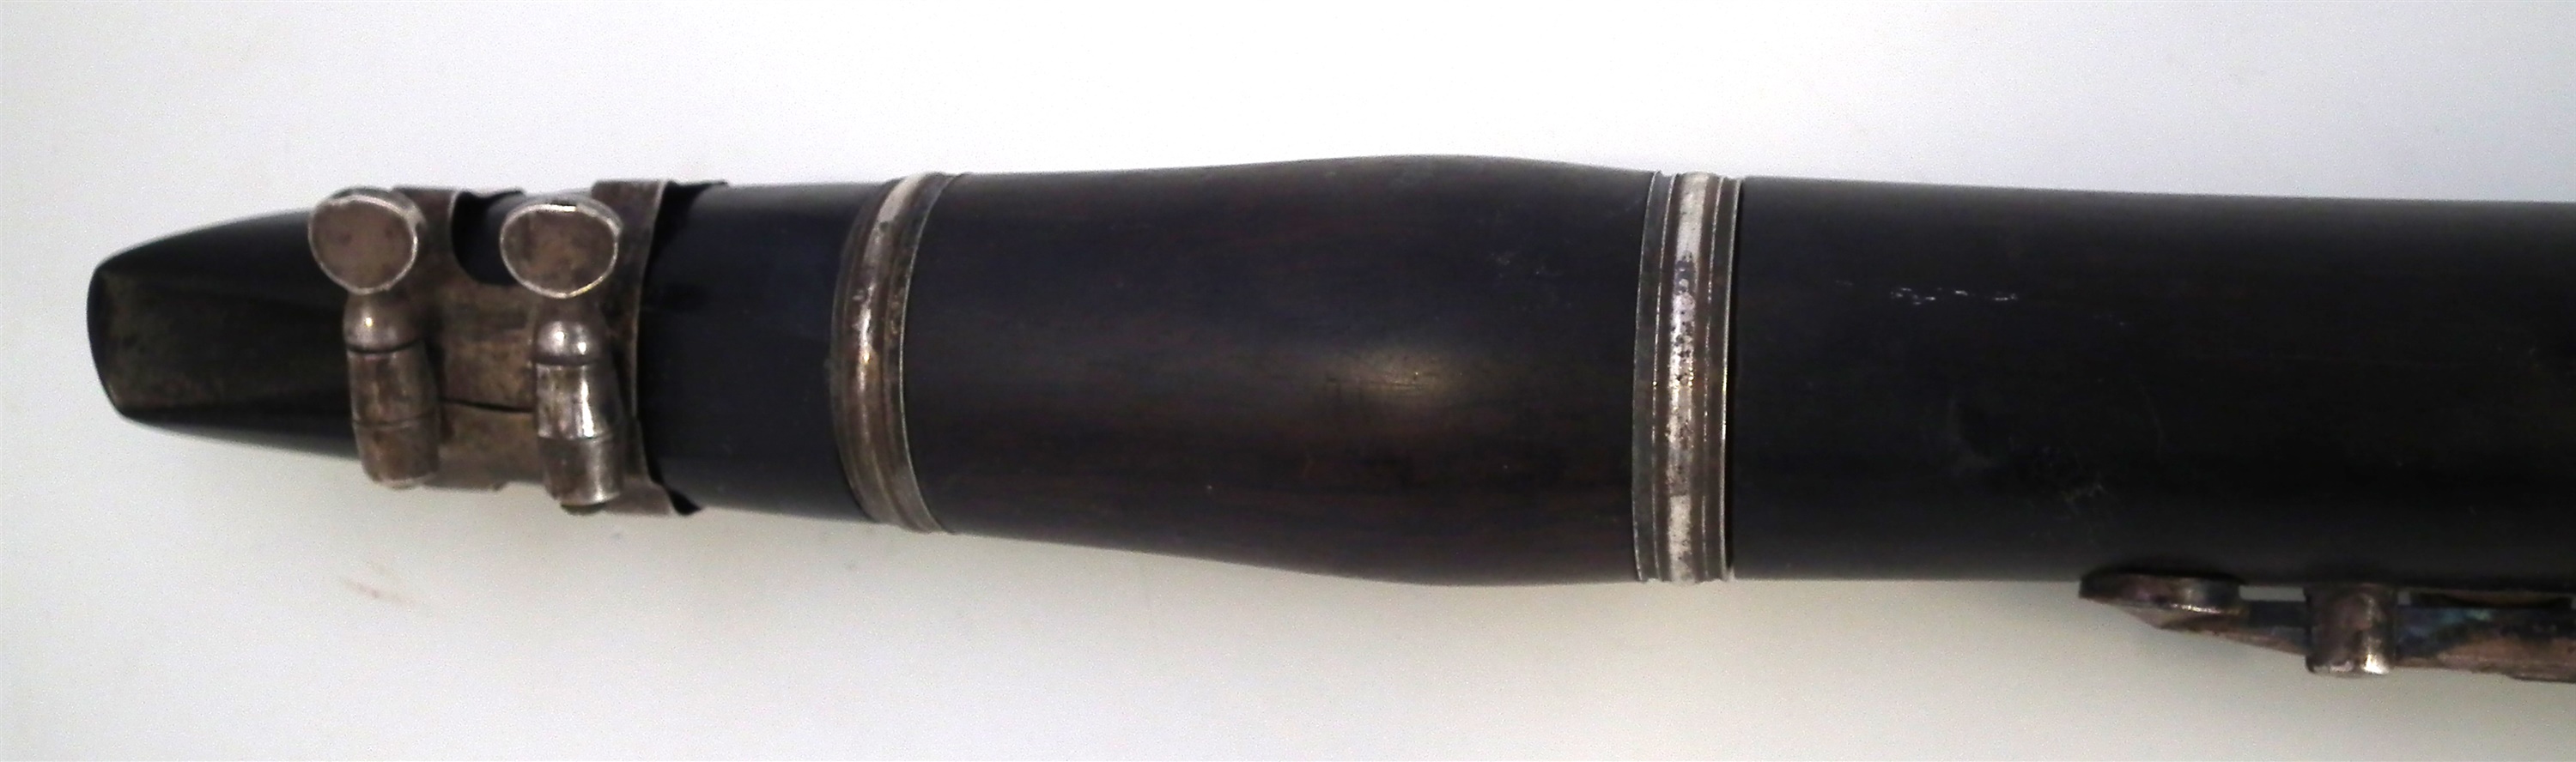 J.R. Lafleur and Sons blackwood Clarinet, number 37835, 67cm long - Image 5 of 7